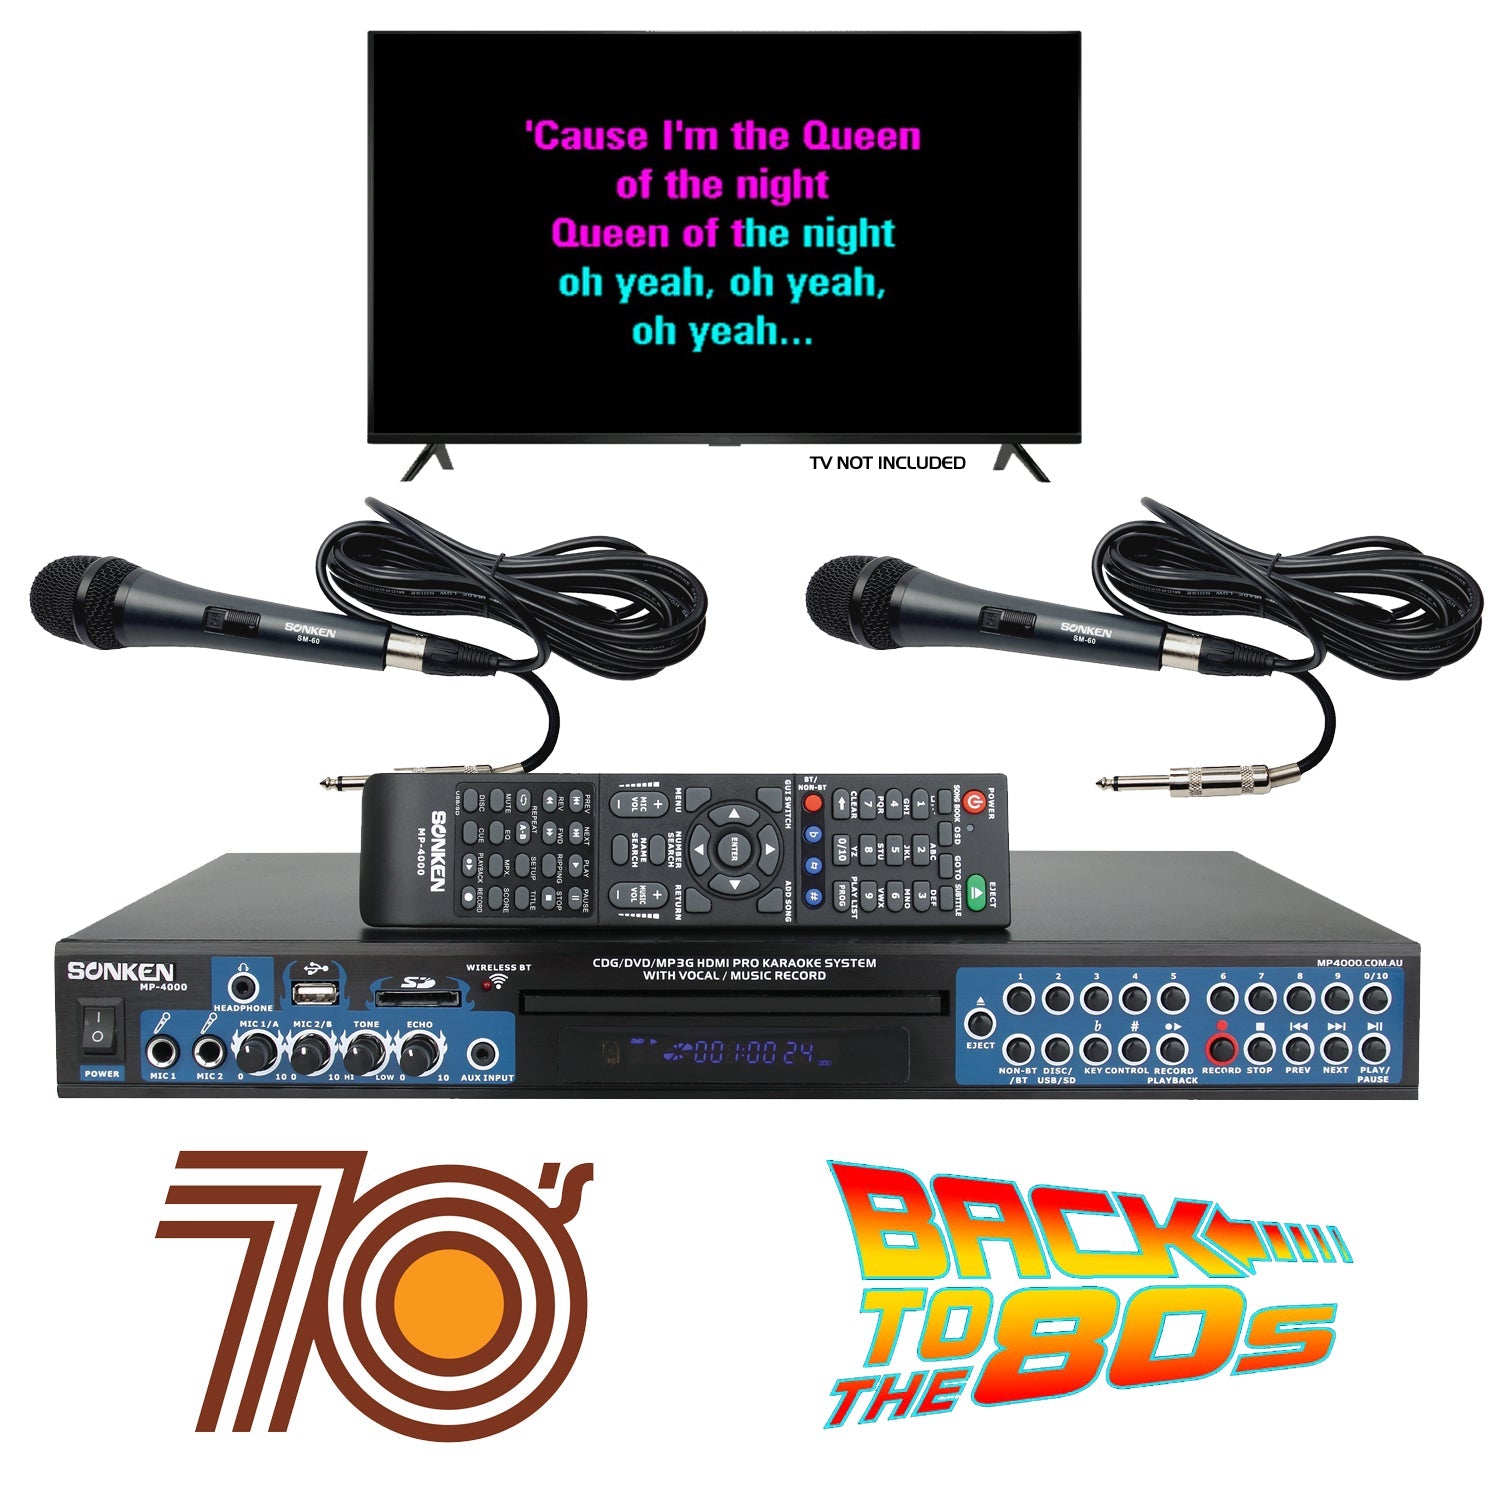 Sonken MP4000 Pro Karaoke Machine + 420 Songs from the 70's & 80's + 2 Wired Microphones - Karaoke Home Entertainment